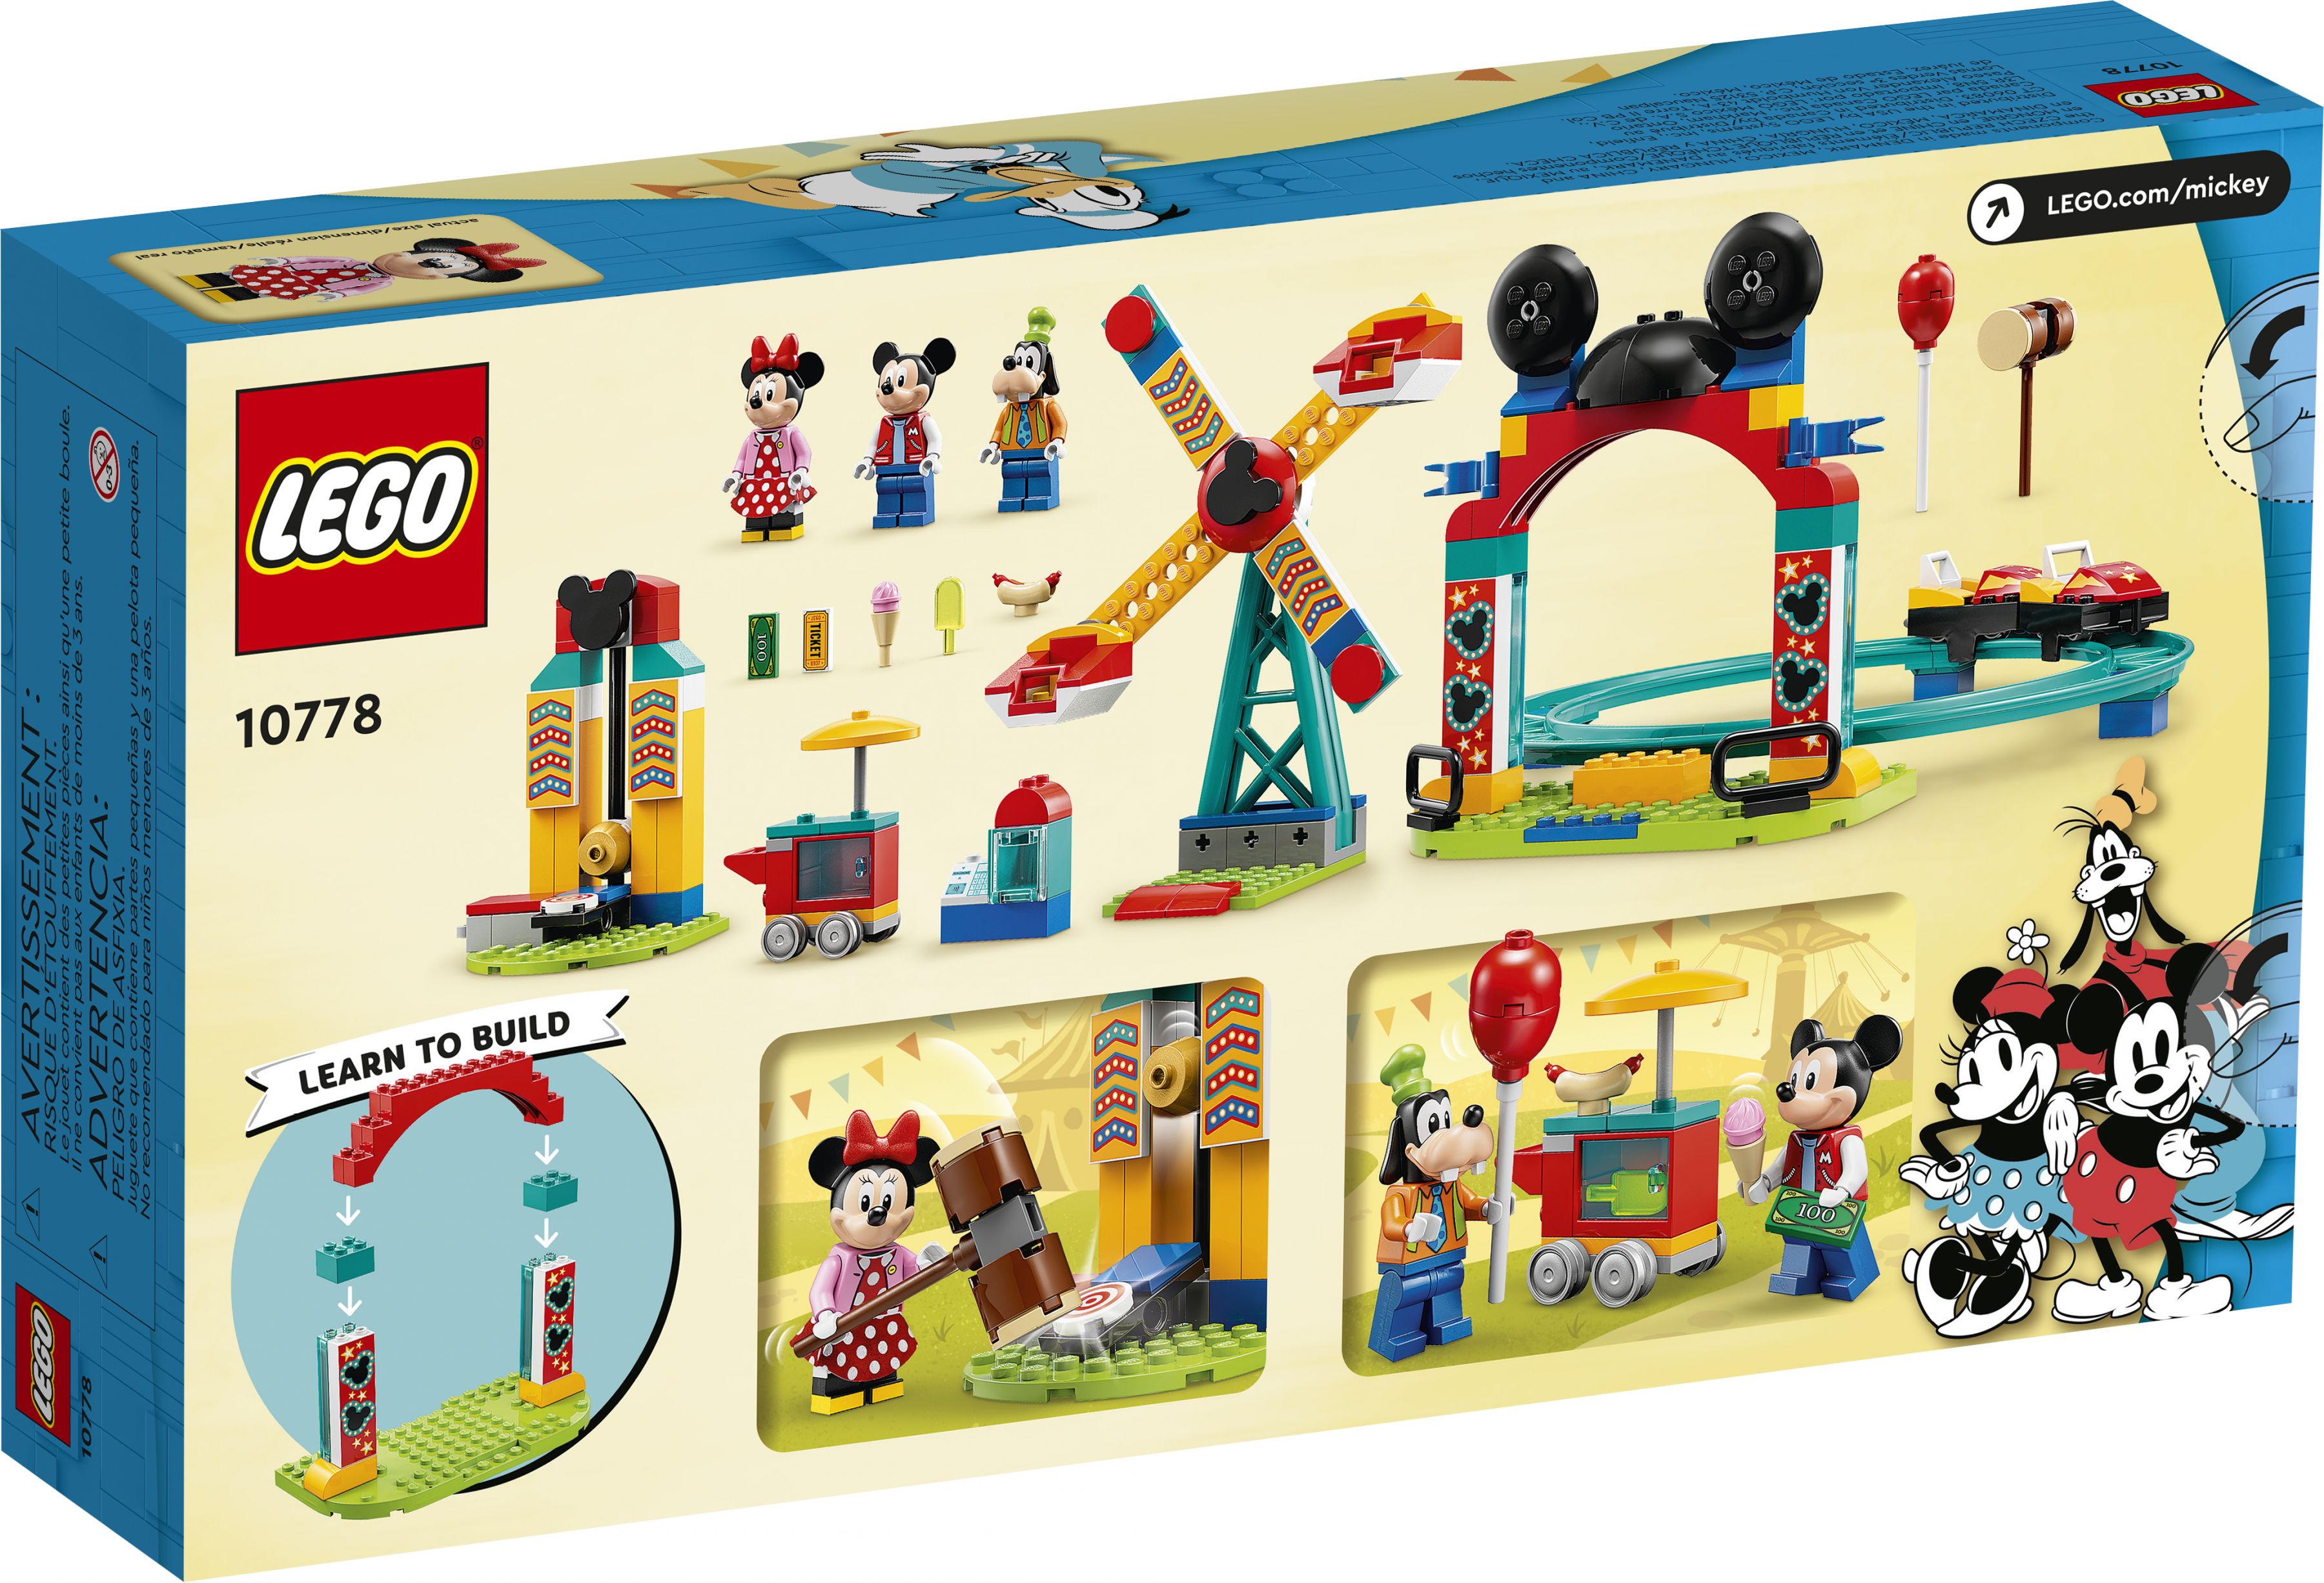 LEGO Disney 10778 Micky, Minnie und Goofy auf dem Jahrmarkt LEGO_10778_Box5_v39.jpg